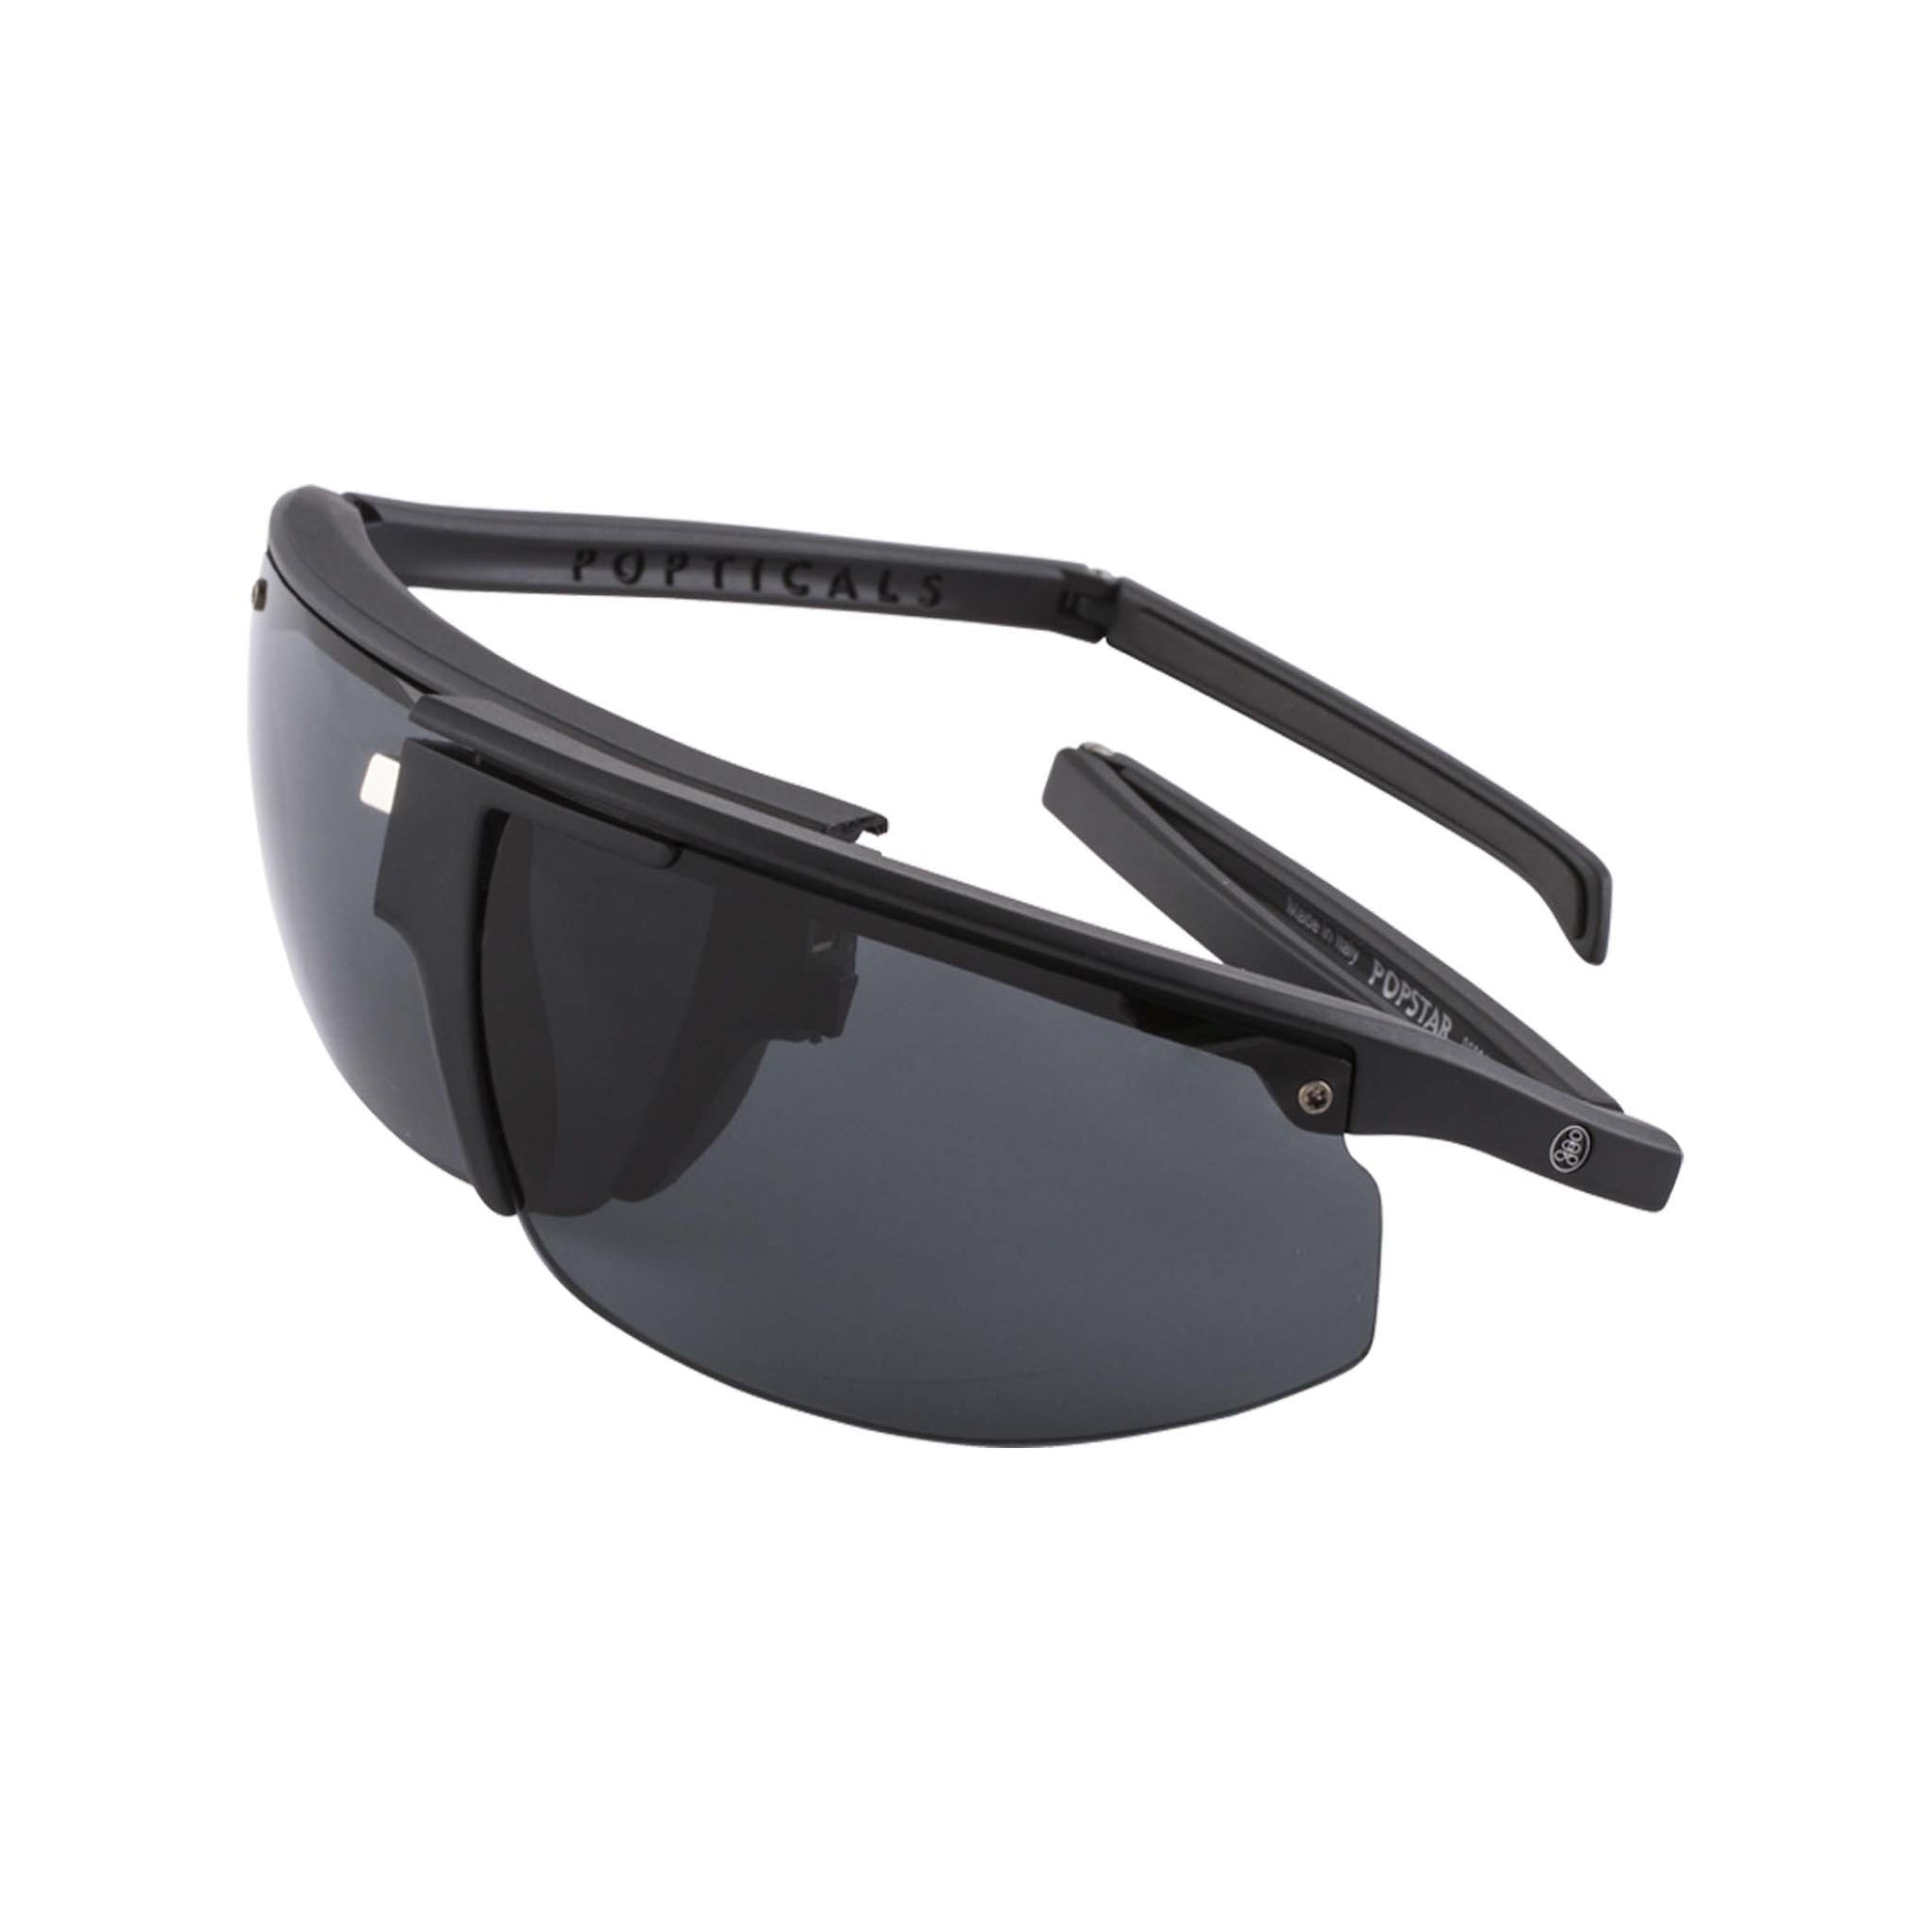 Popticals, Premium Compact Sunglasses, PopStar, 010040-BMGS, Standard Sunglasses, Matte Black Frame, Gray Lenses, Spider View